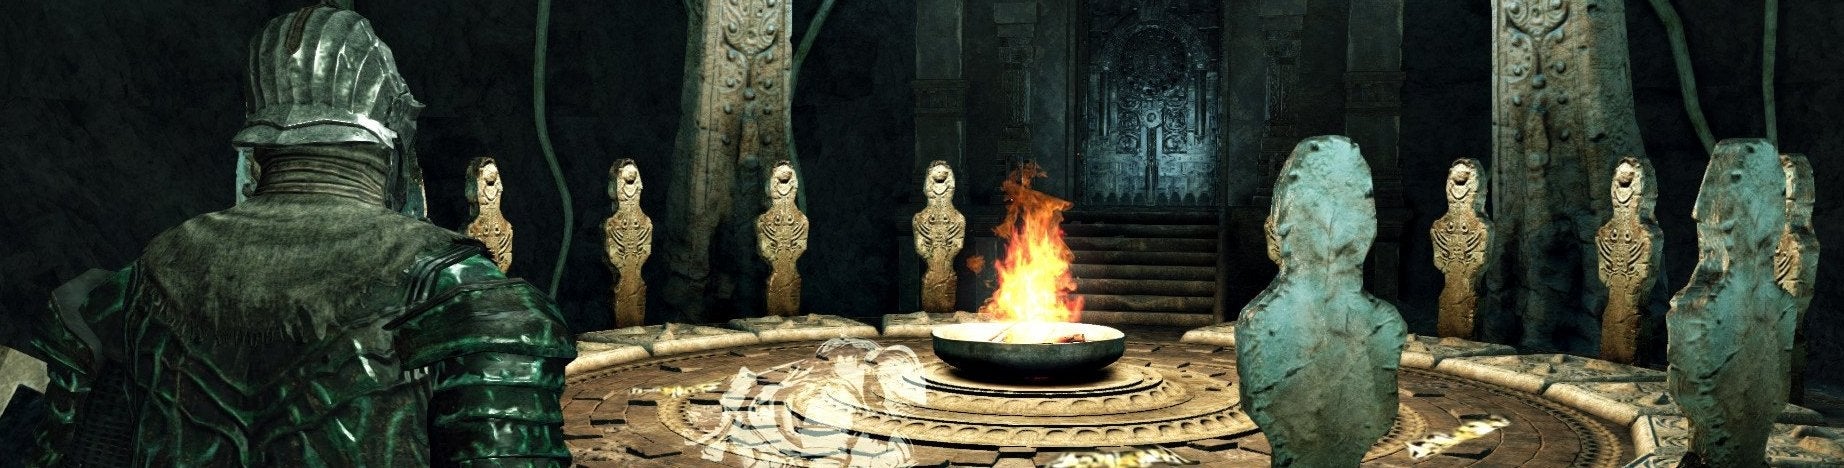 Image for RECENZE přídavku pro Dark Souls 2: Crown of the Sunken King